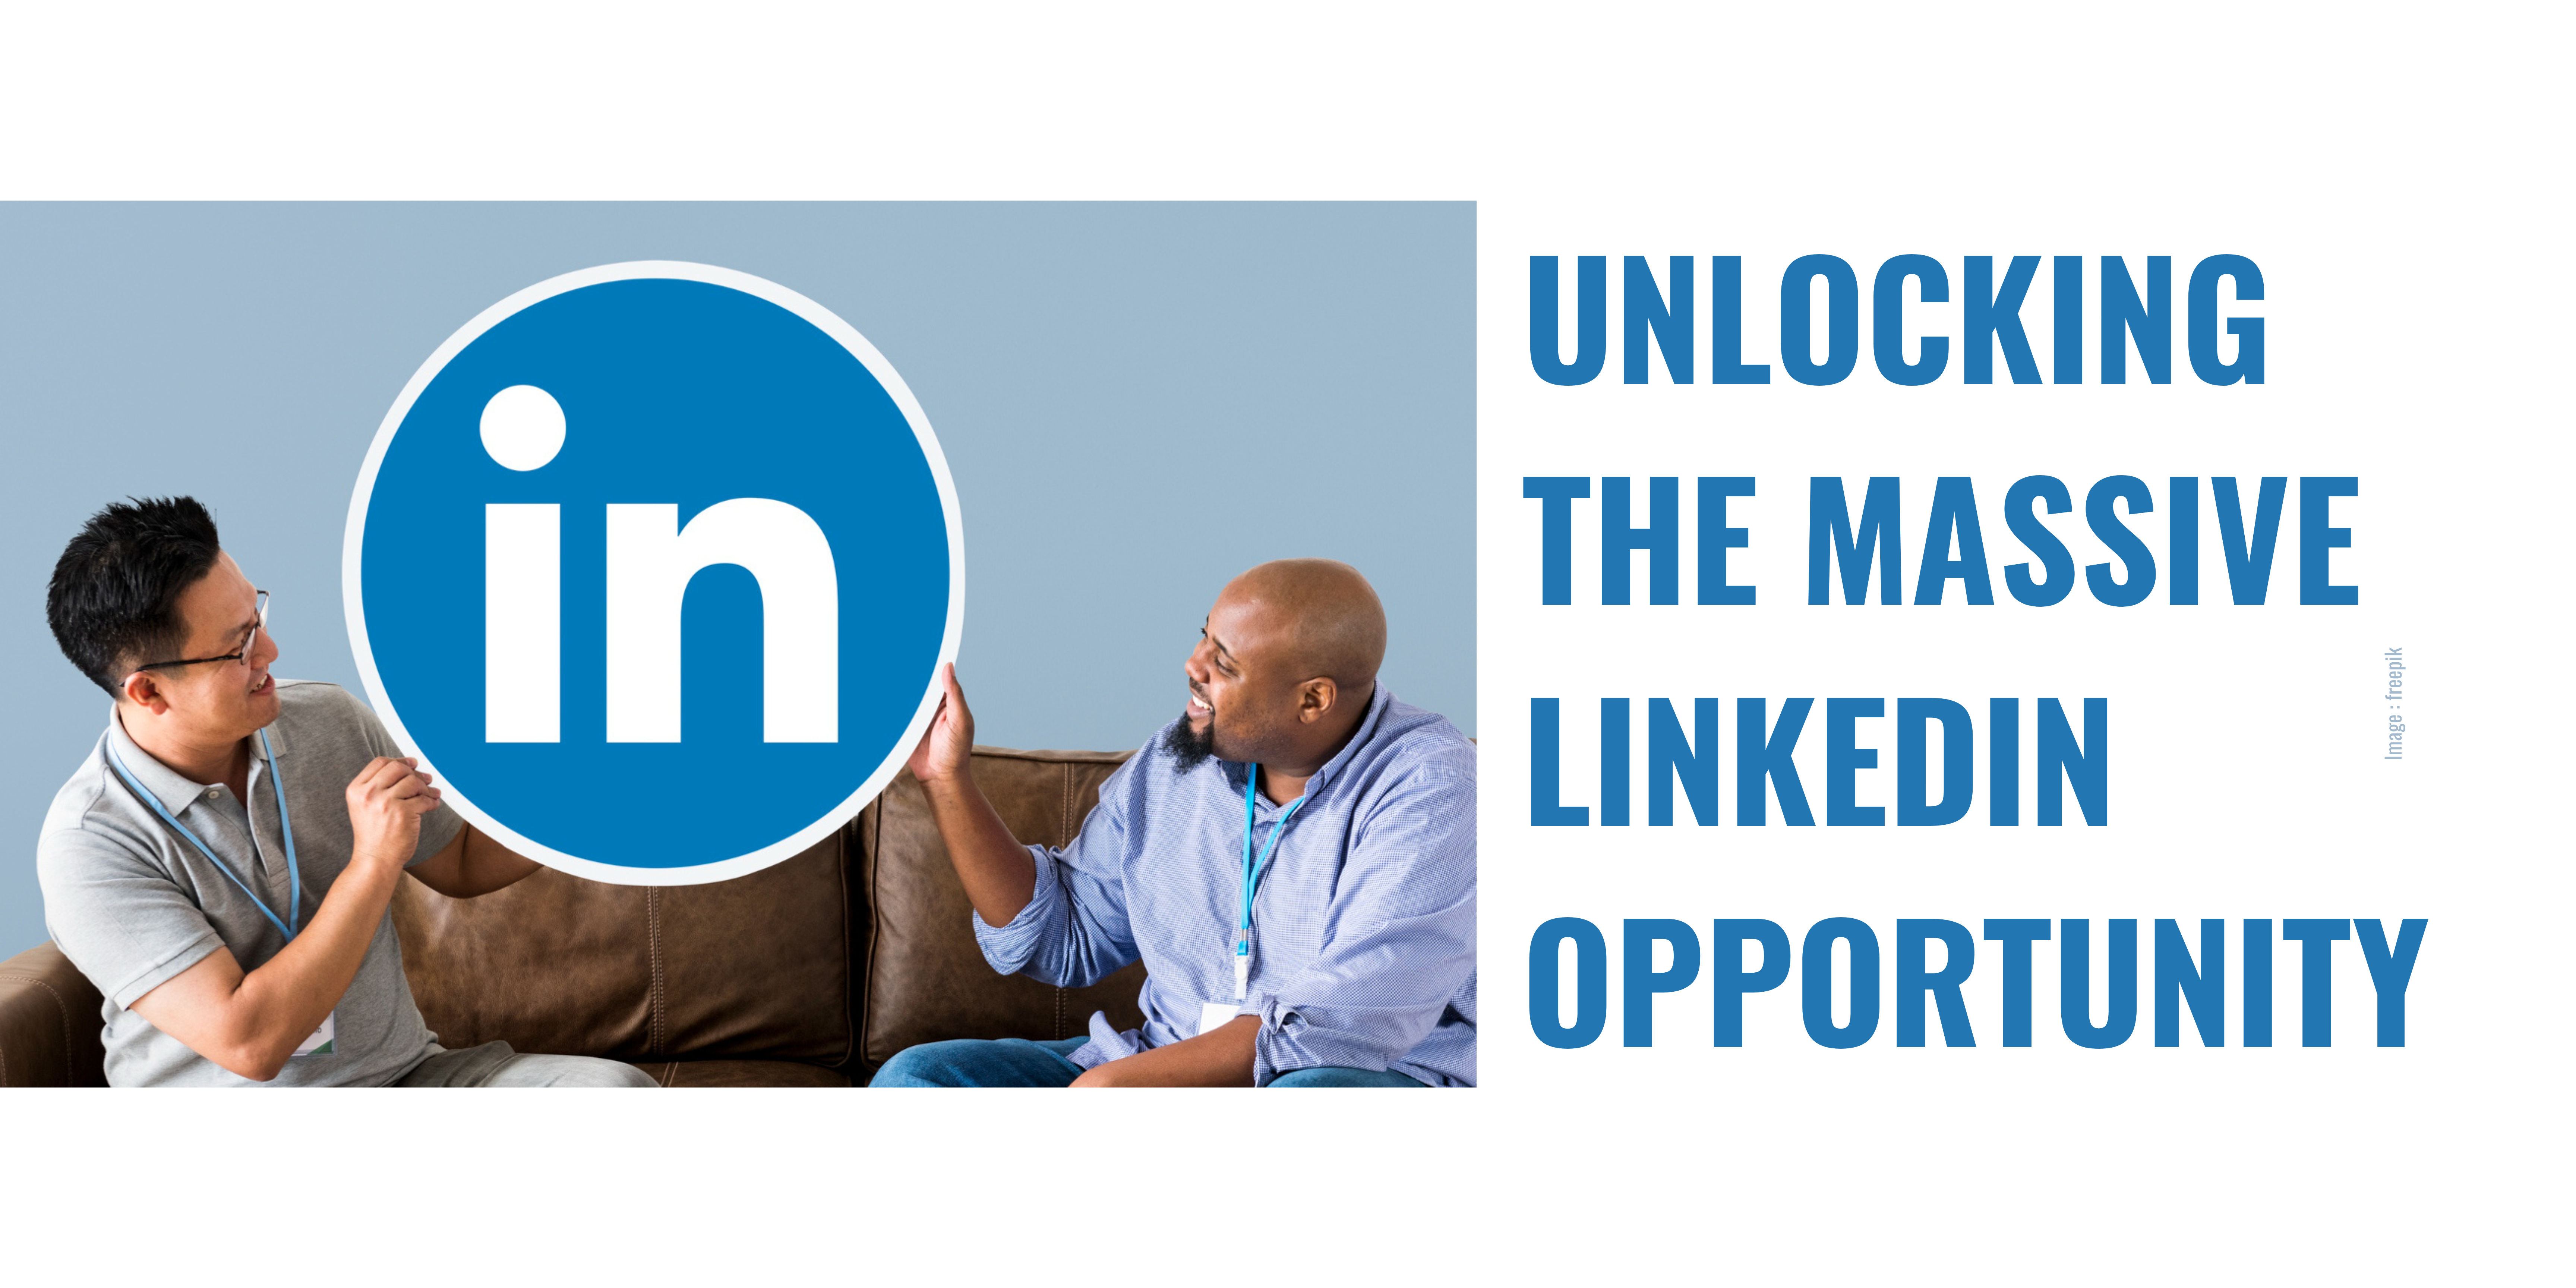 Unlocking the Linkedin opportunity